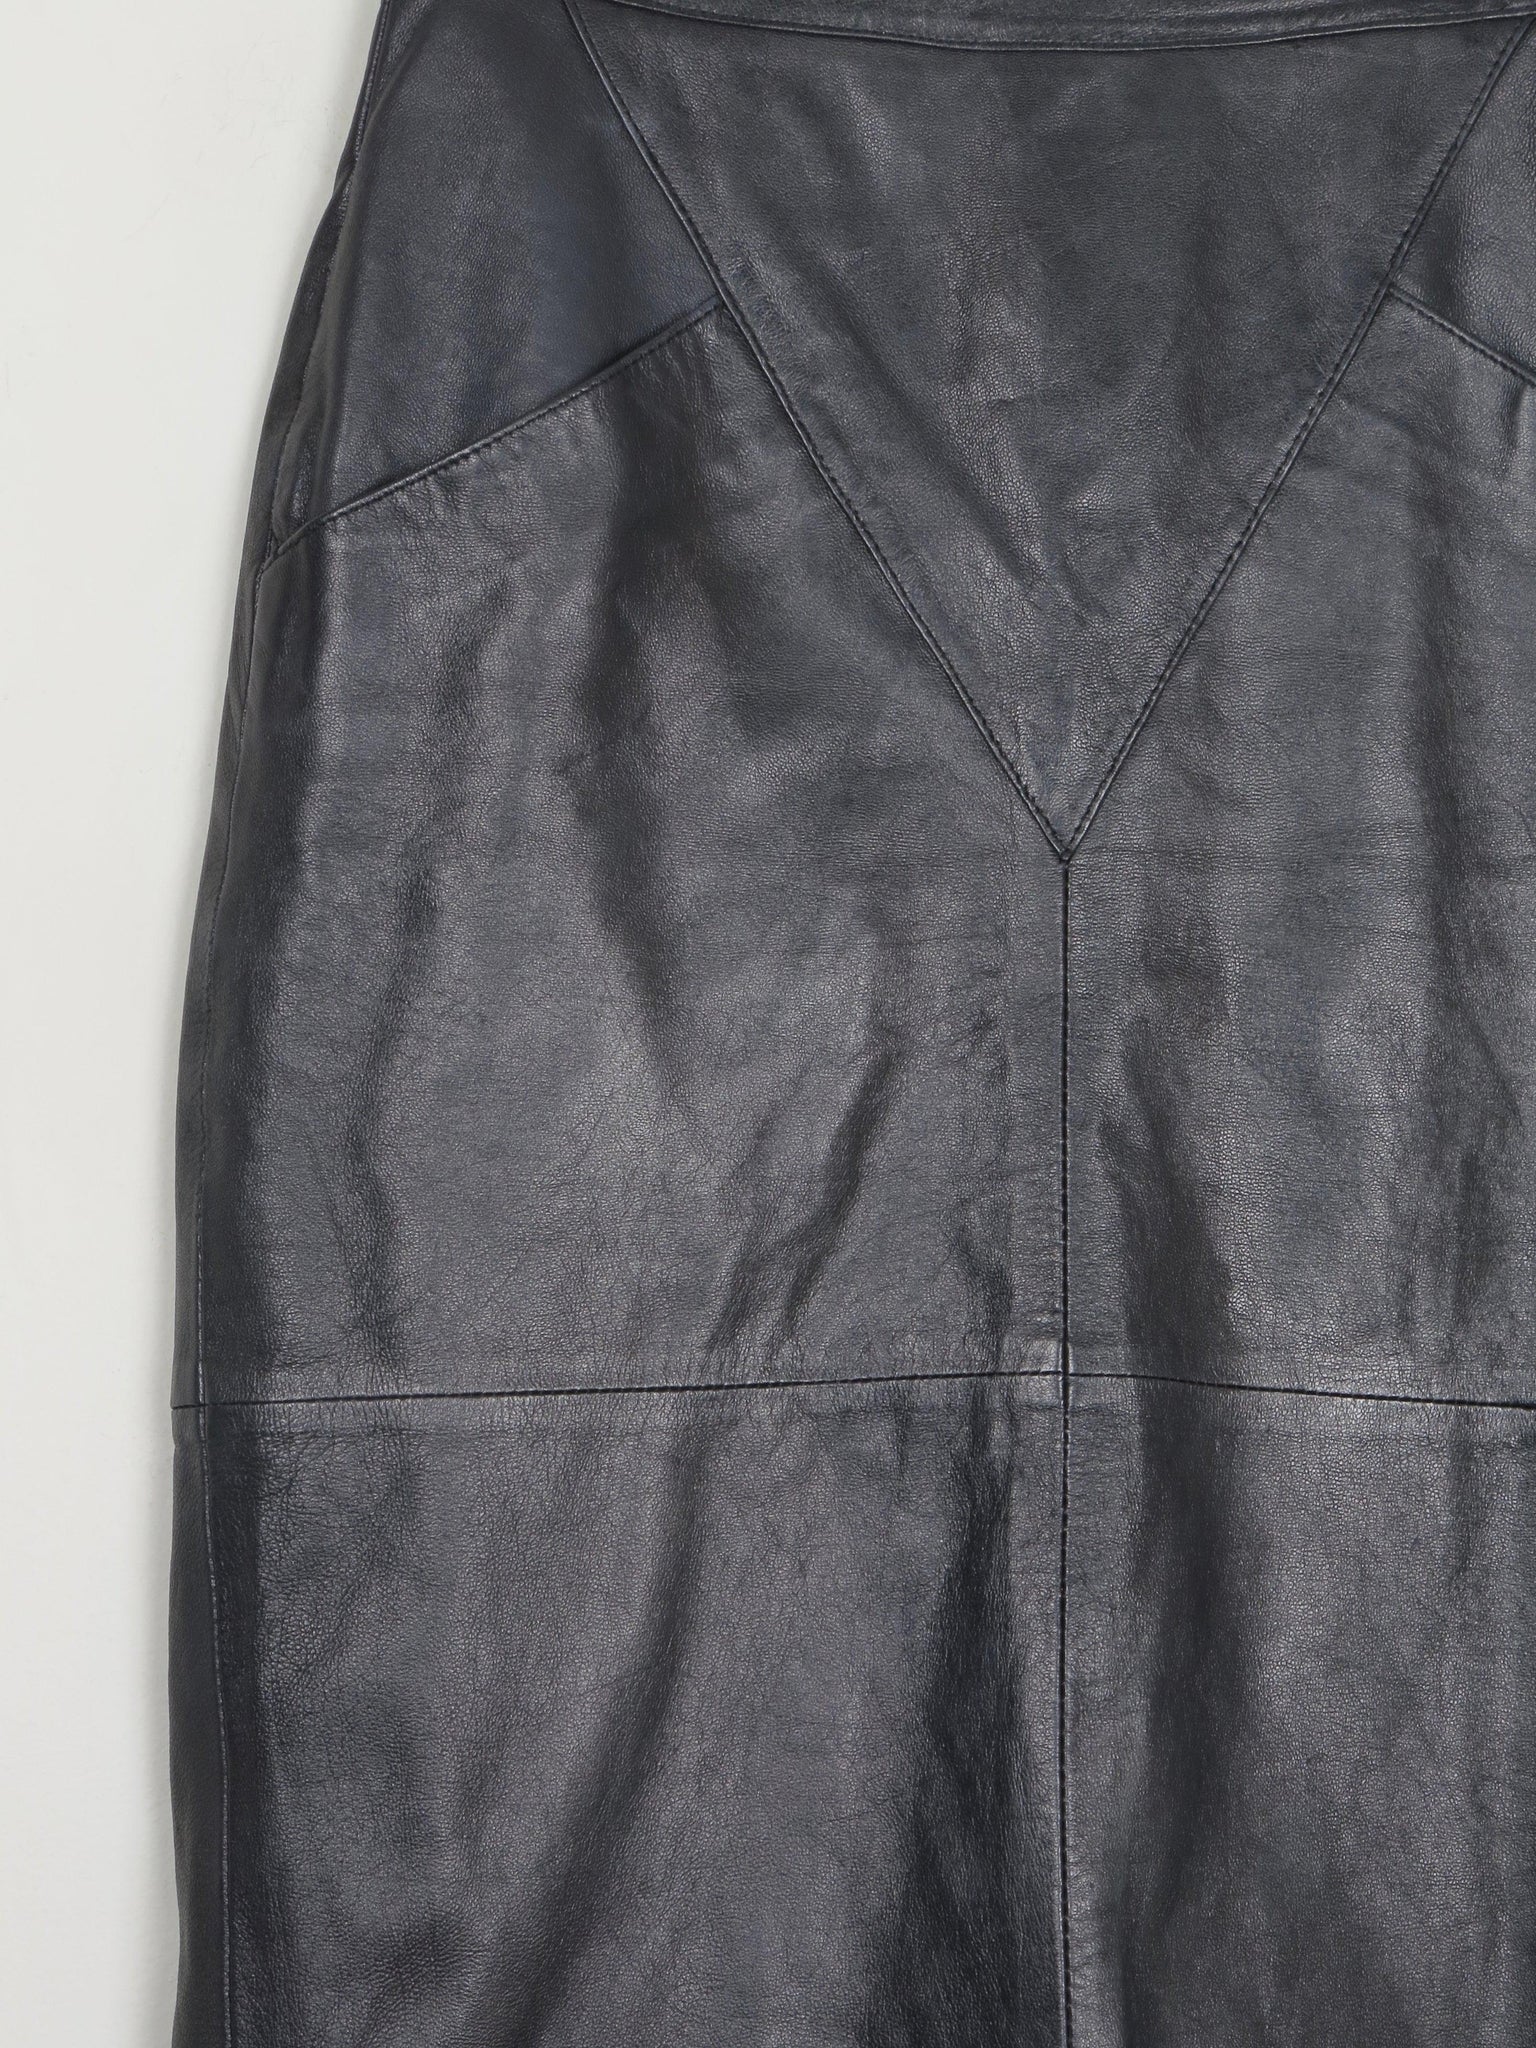 Vintage Black Leather Skirt 26" 6/8 XS - The Harlequin